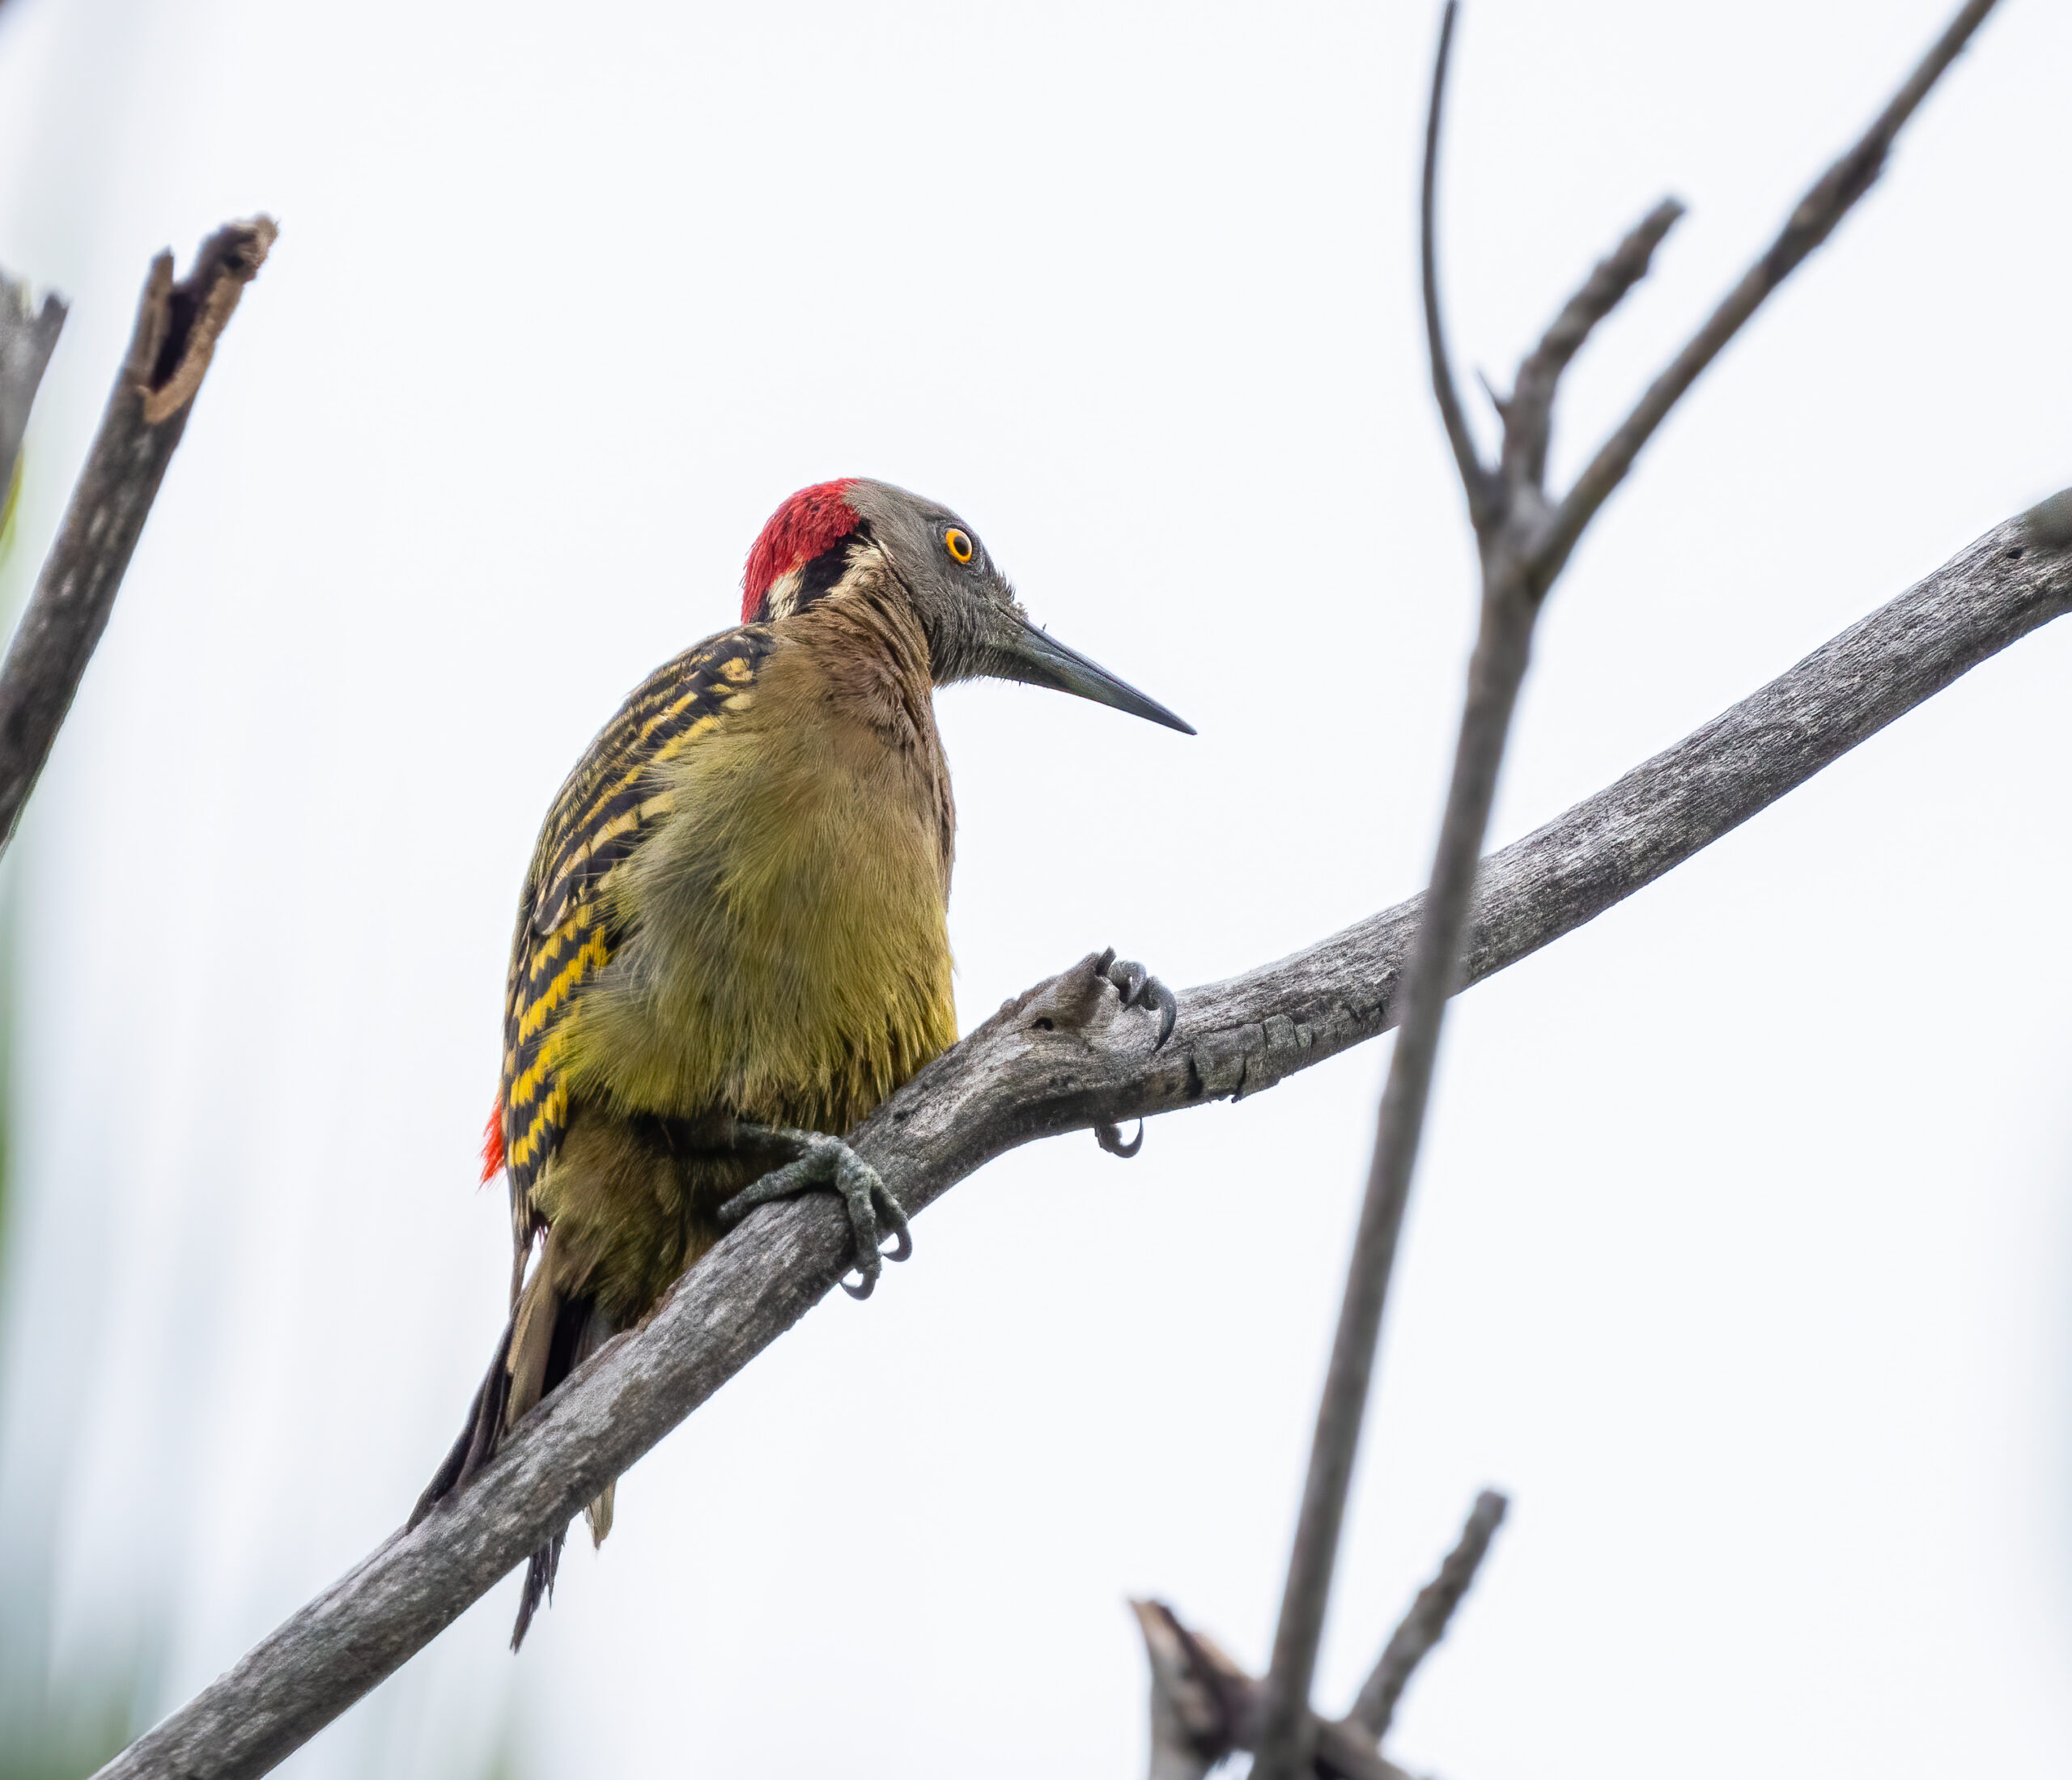 Carpintero Dominicano (Hispaniola Woodpecker)1/3200 sec at f/7.1, ISO 1250 at 600 mm